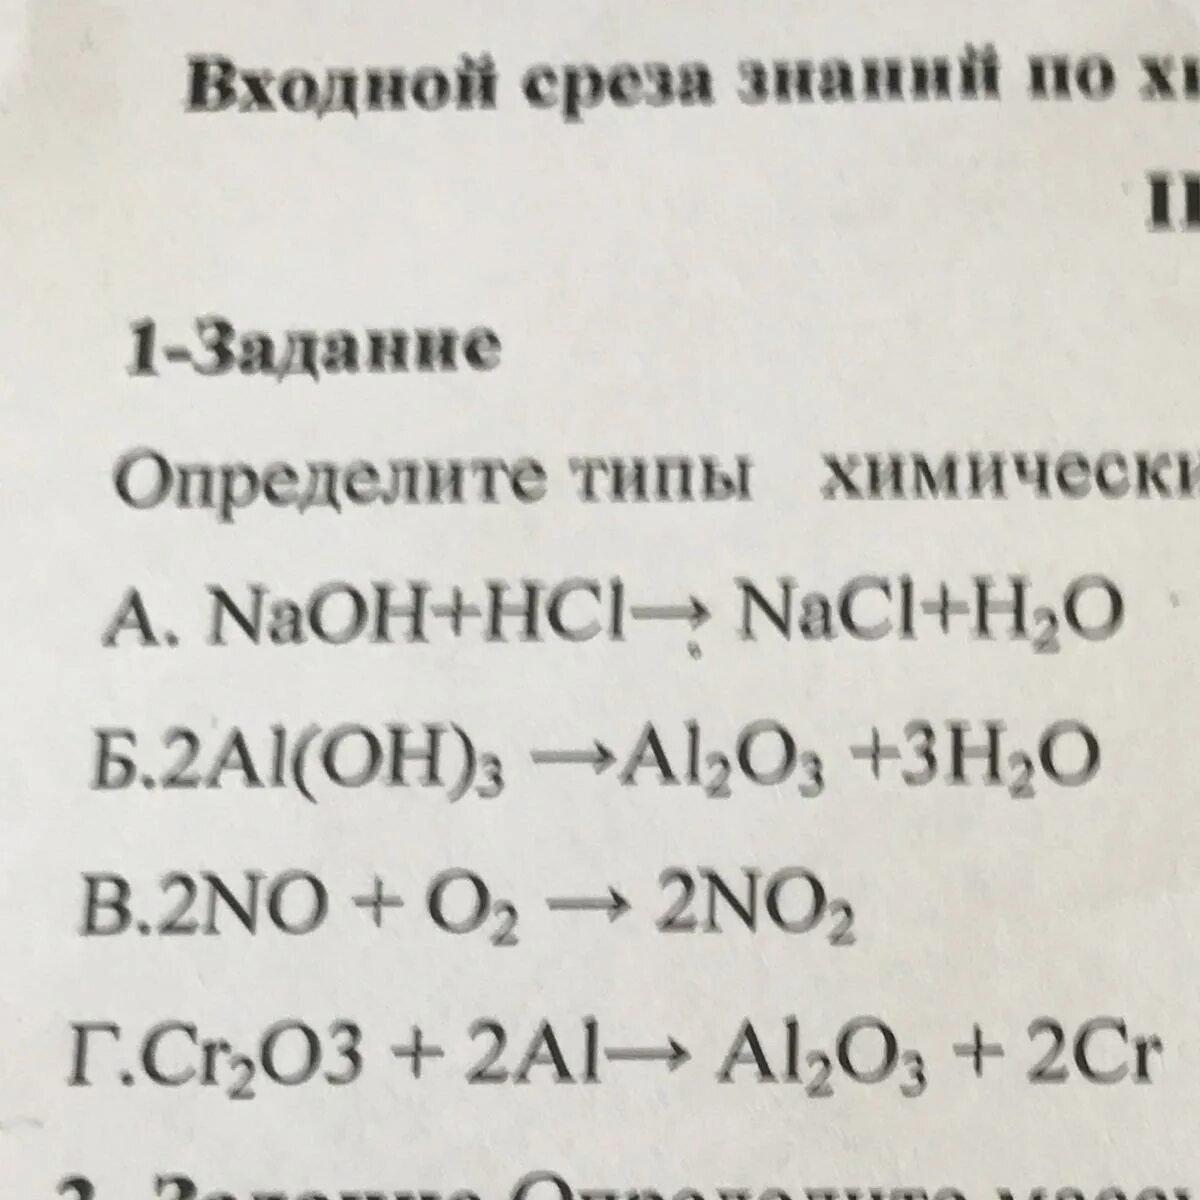 Hci na20. Уравнение хим реакции NAOH+HCI=Naci+h2o. А1(он)3 → а1203 + н20. Раствить коэффициент NAOH + HCI = Naci +h2o. Определите Тип химической реакции , уравнение которой : HCI+NAOH-Naci+h2o.